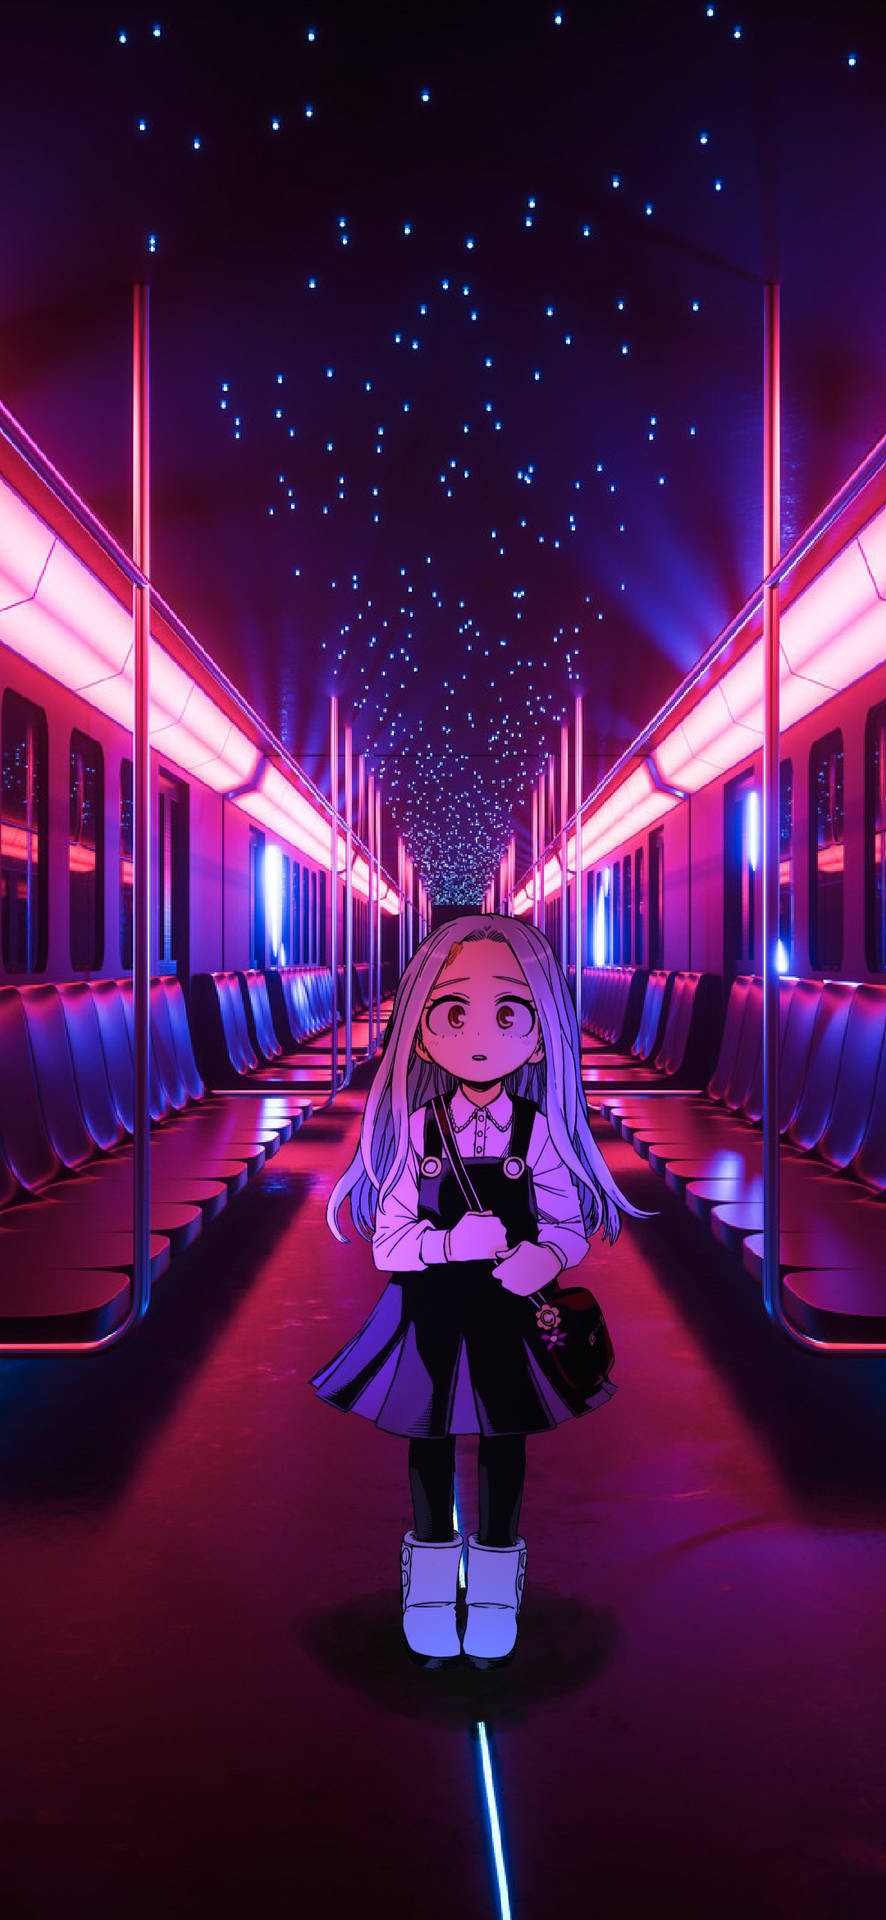 Eri On Colorful Neon Pink Train